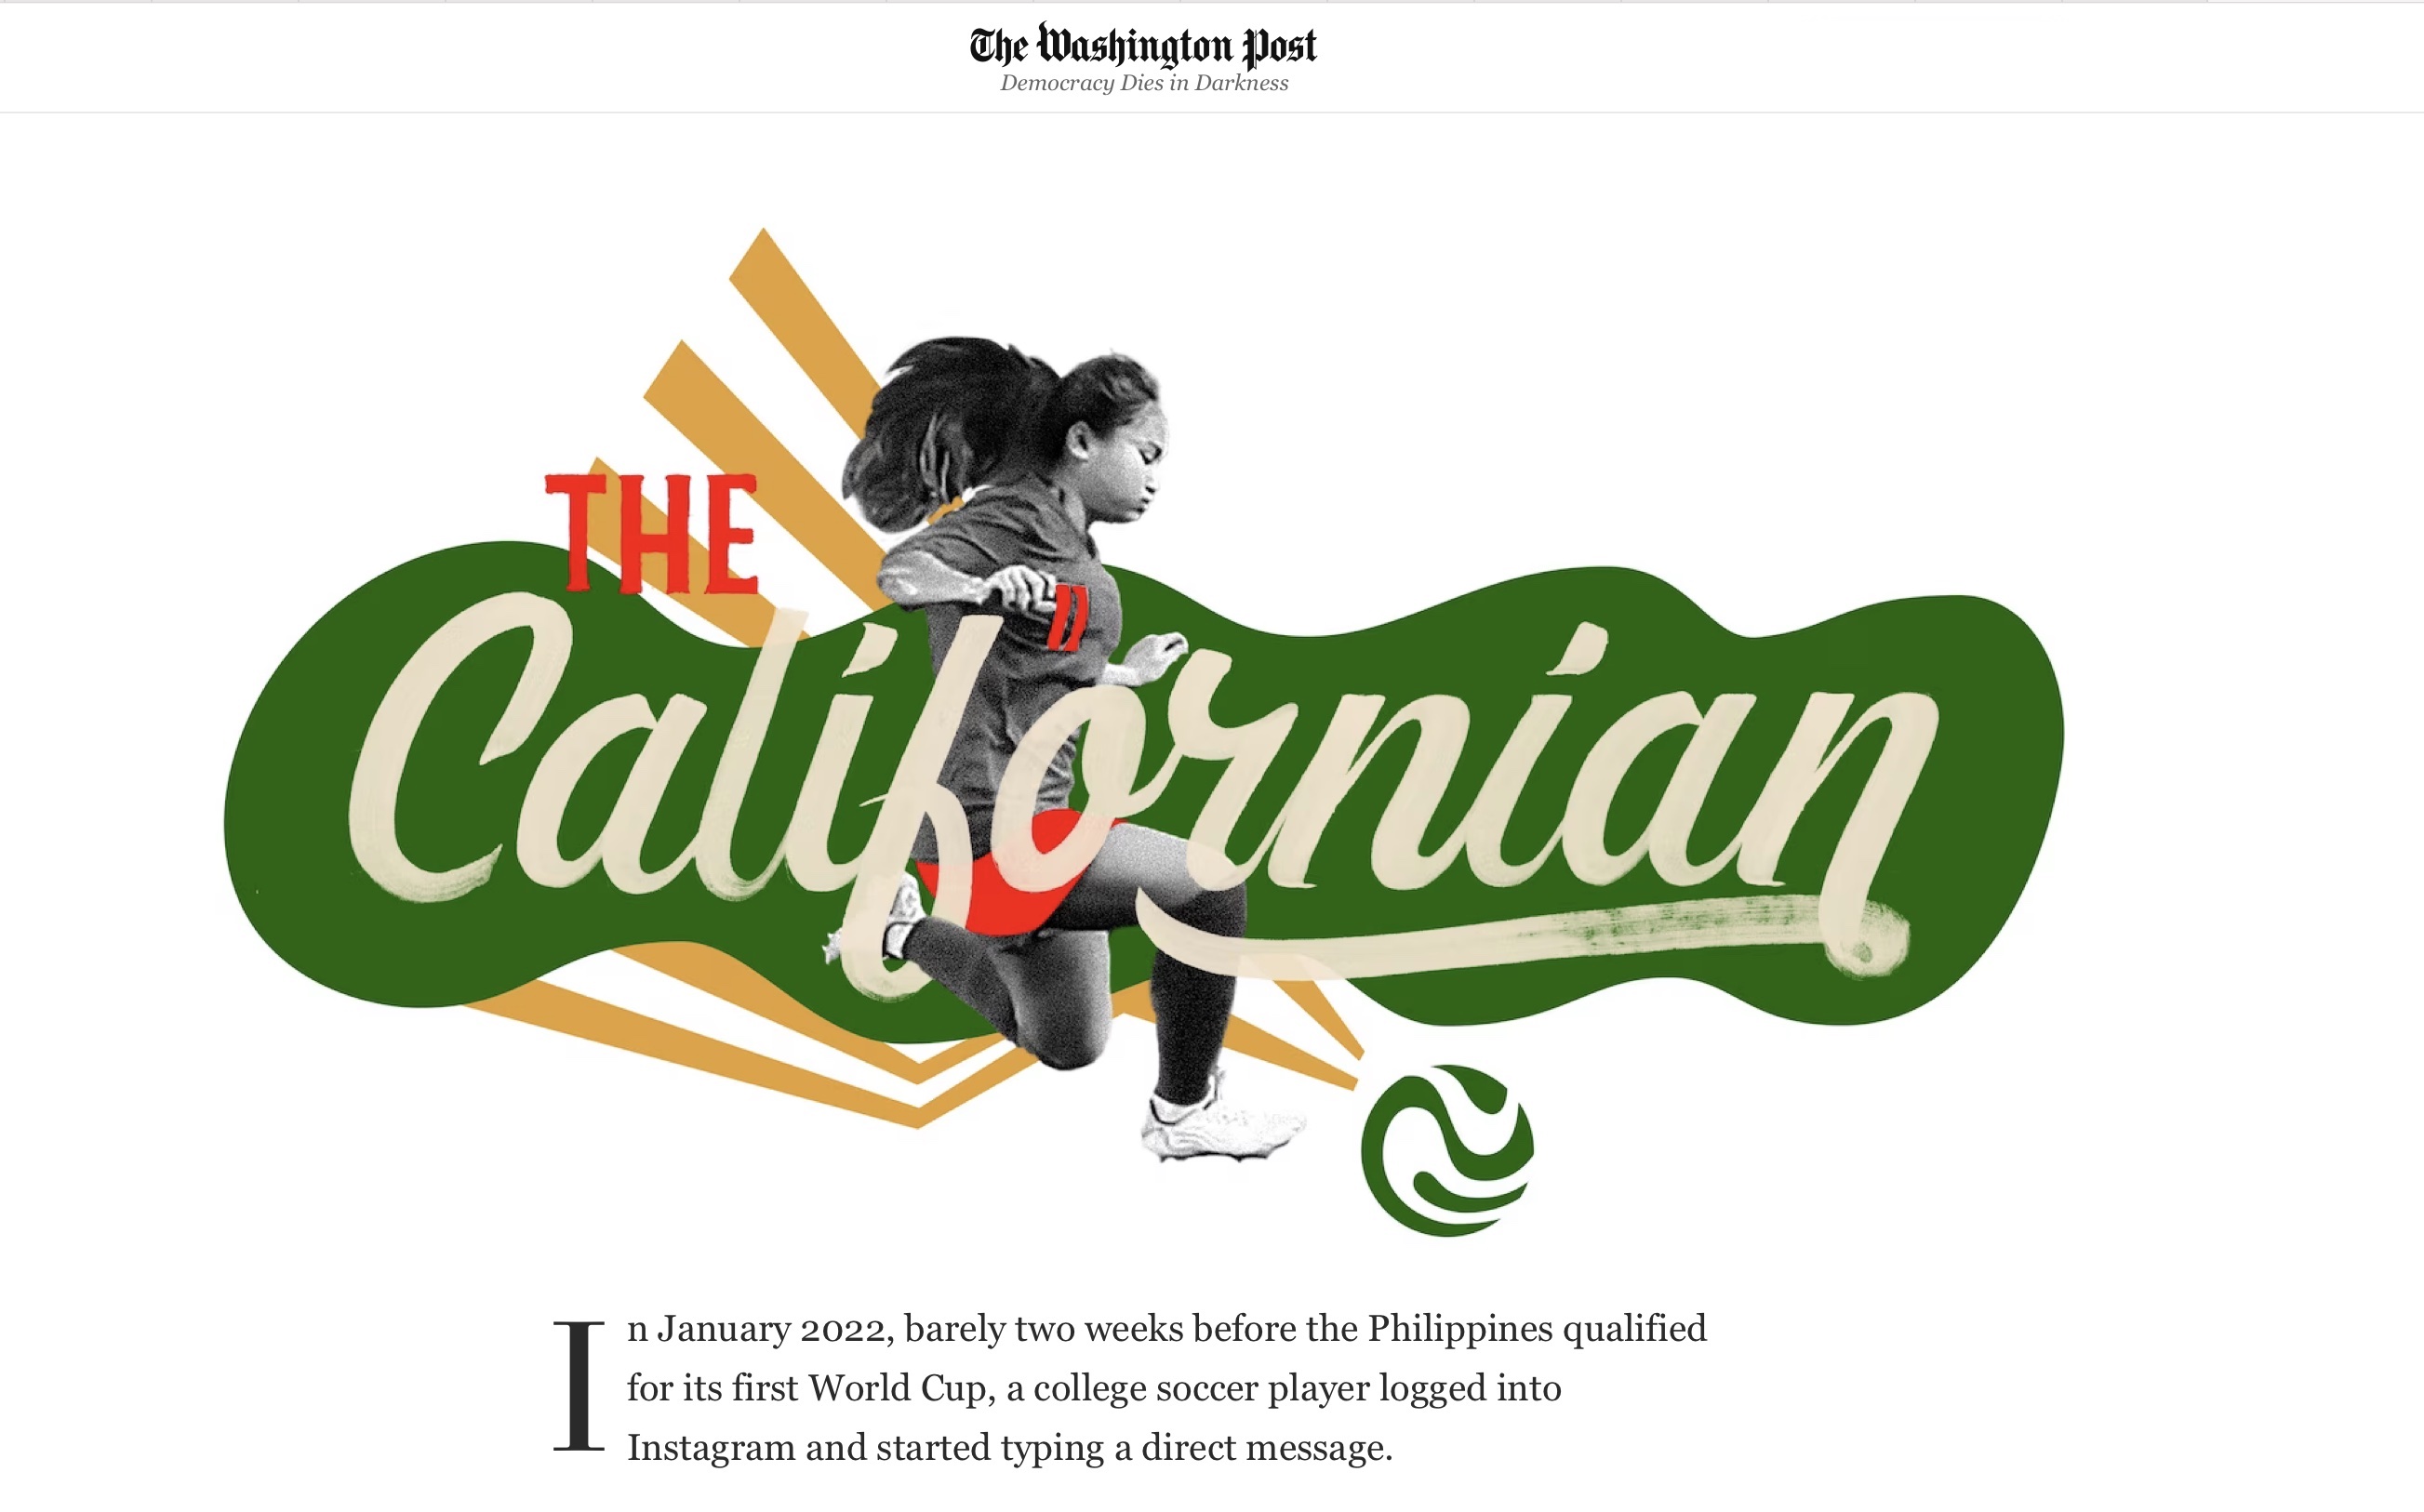 Soccer player Maya Alcantara in a screenshot from The Washington Post that says "The Californian"